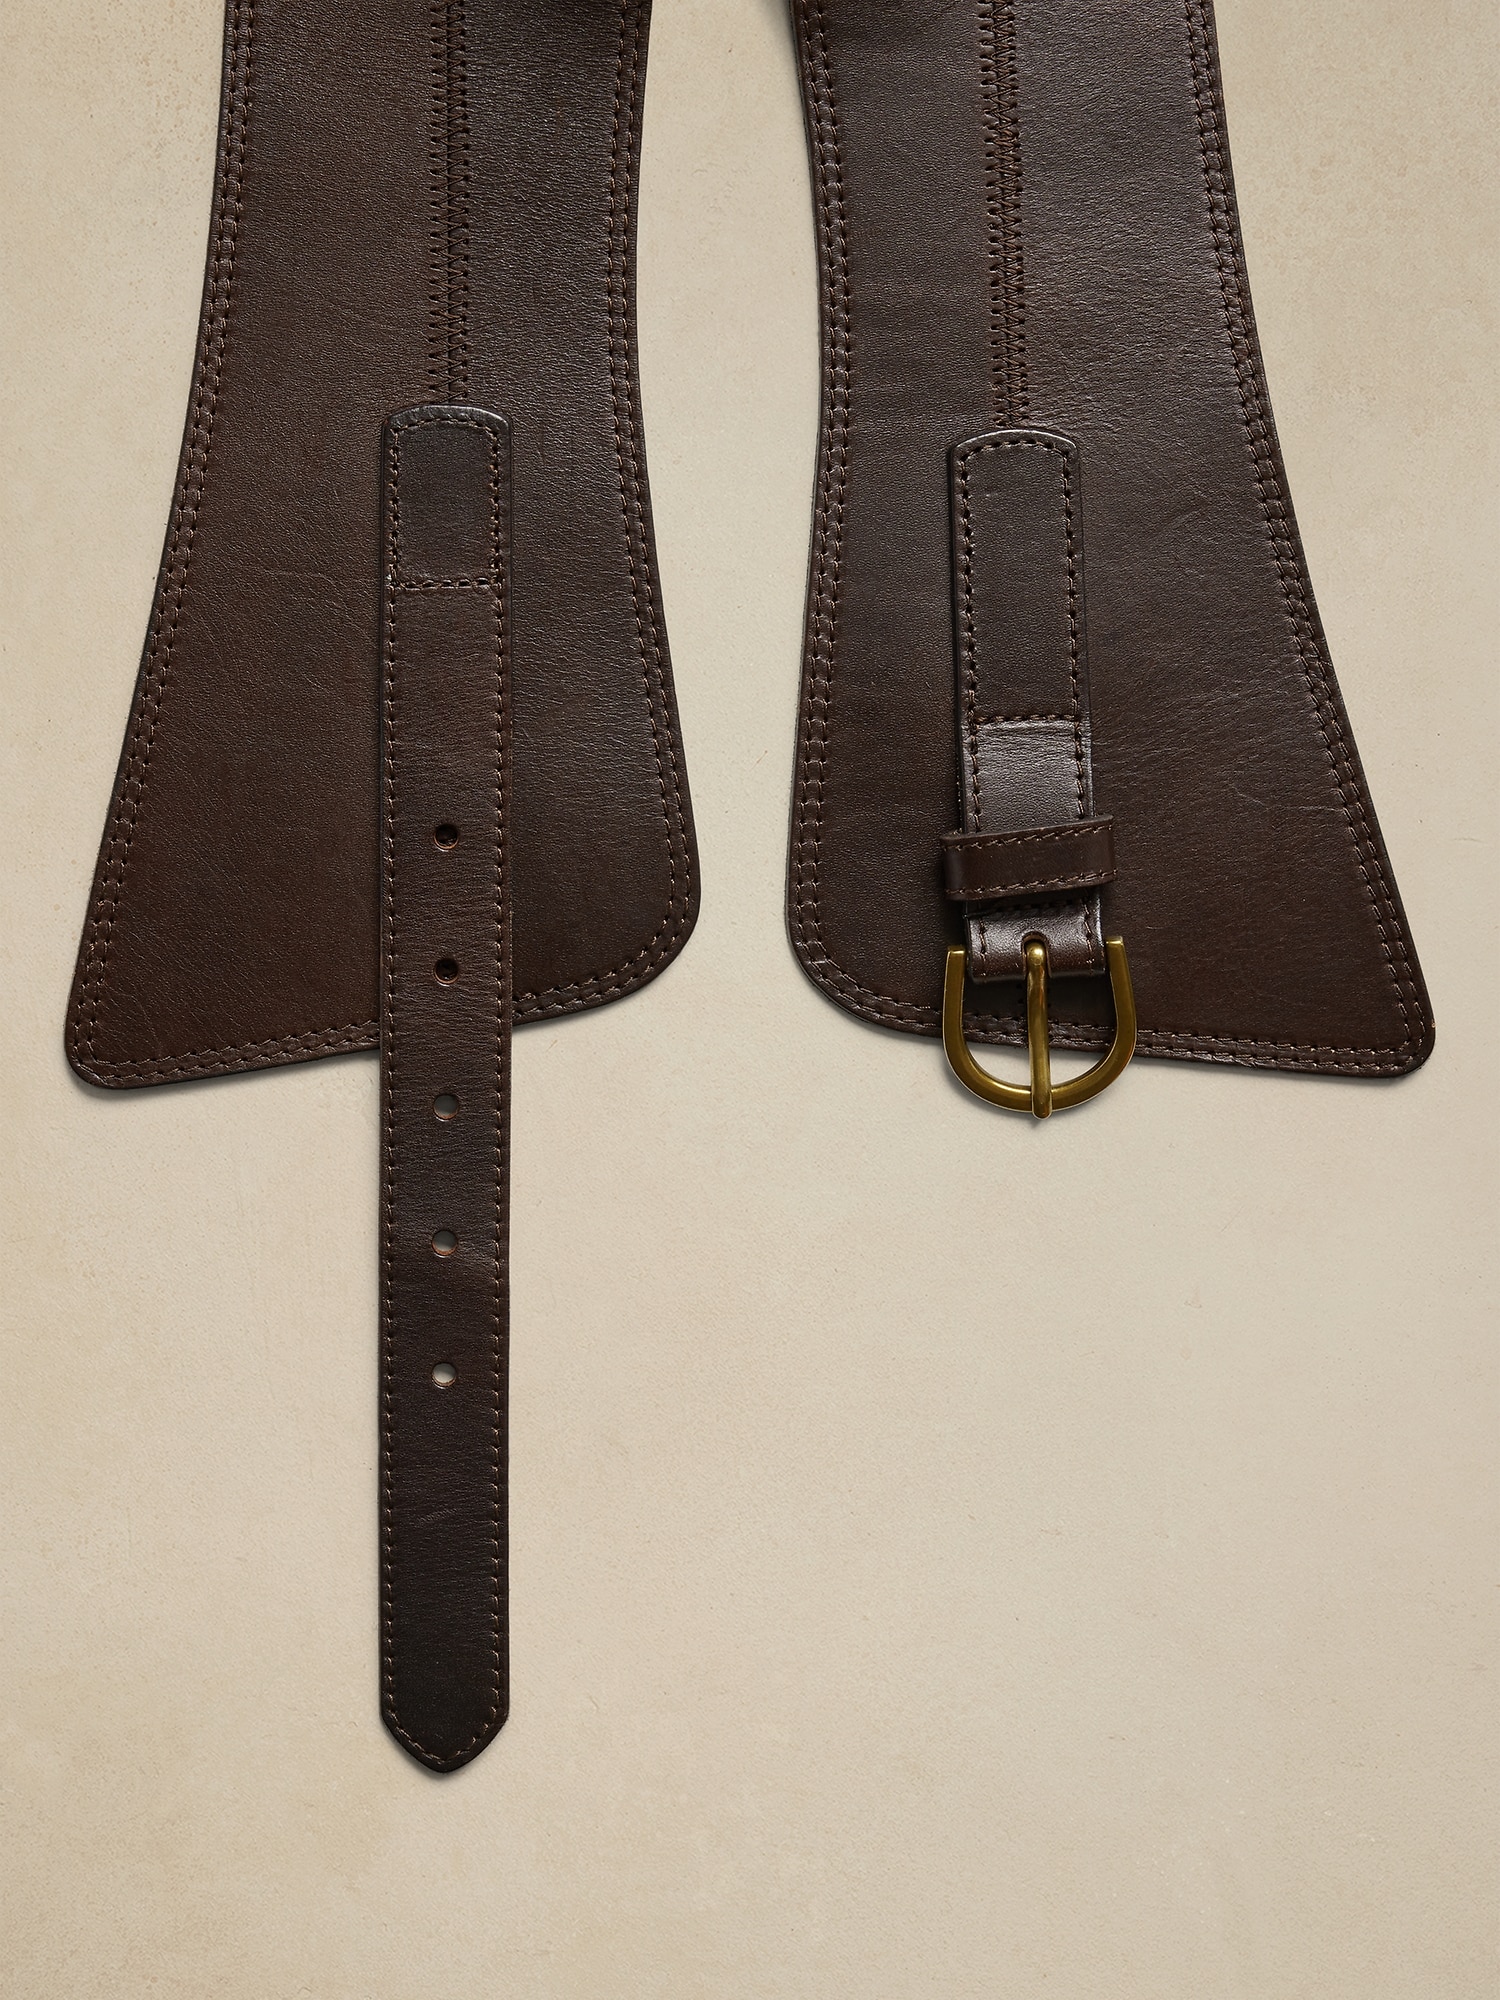  Gleamart Coffee Lace-up Corset Belt Elastic Leather